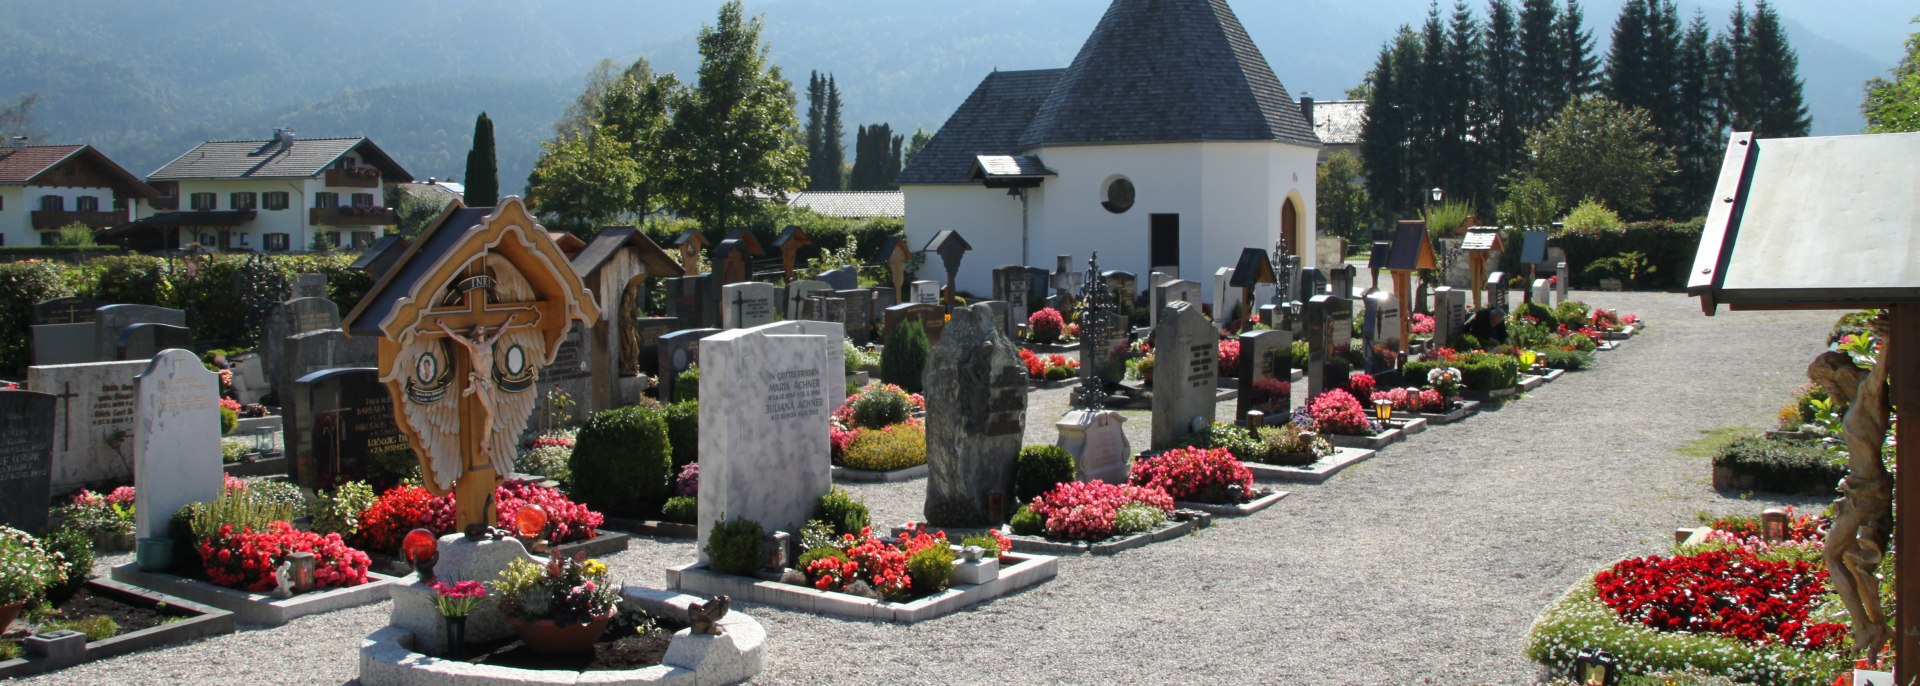 Bild Friedhof Teil B, © Gemeinde Wallgau|Korbinian Sprenger